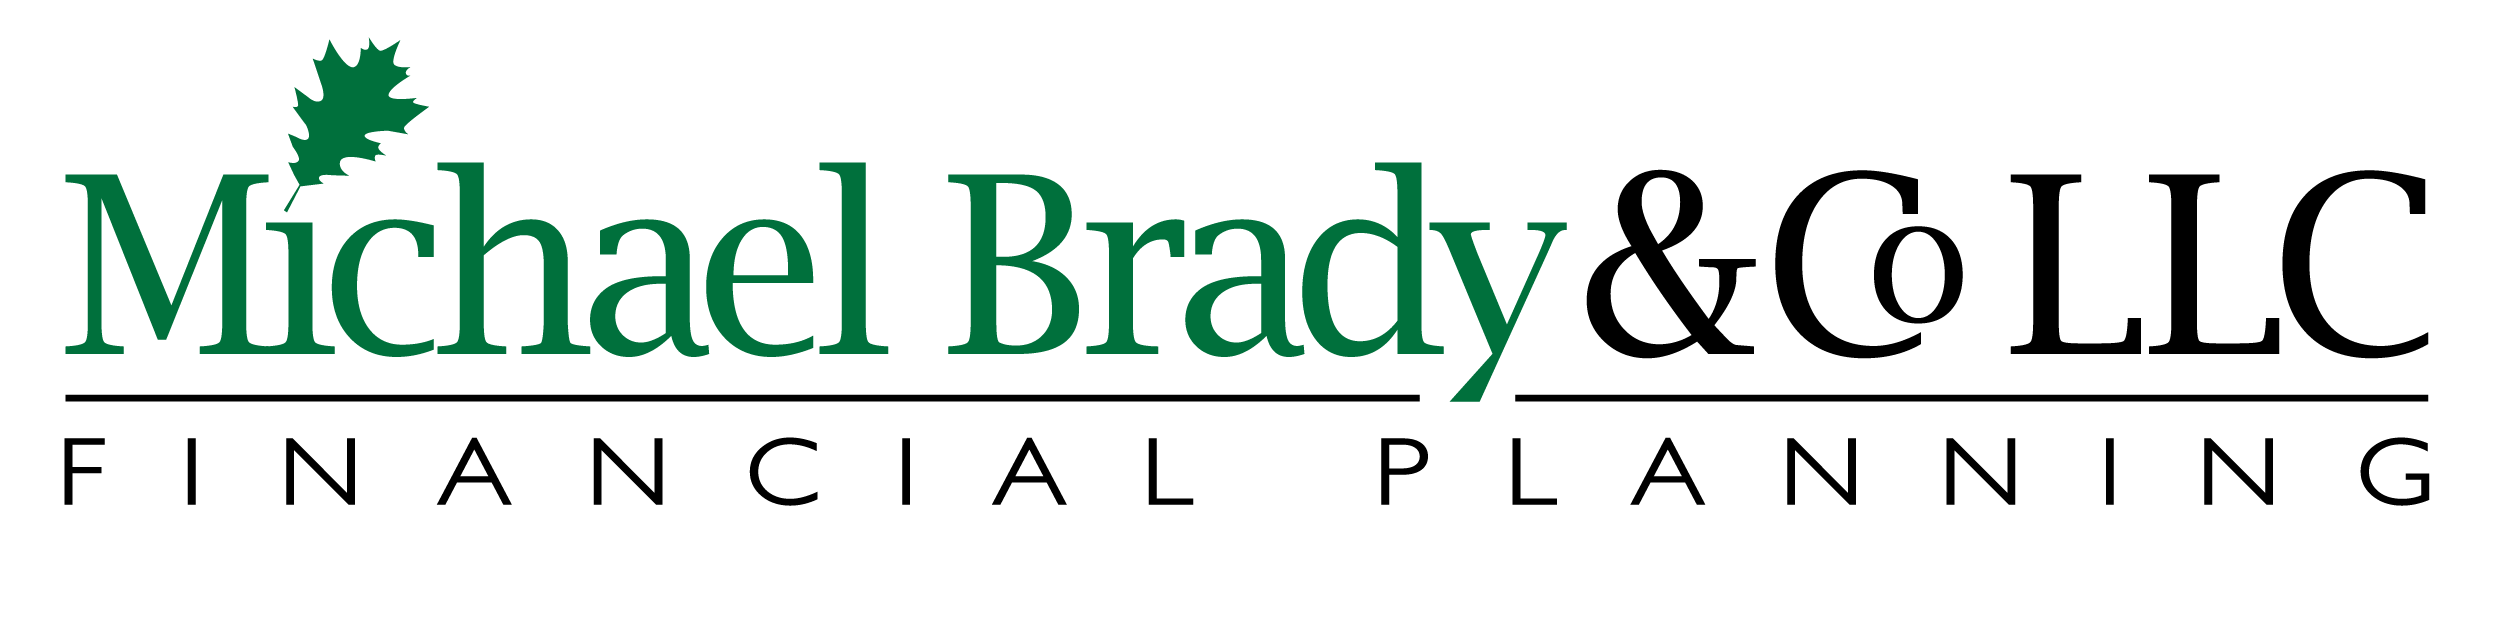 Michael Brady & Co., LLC